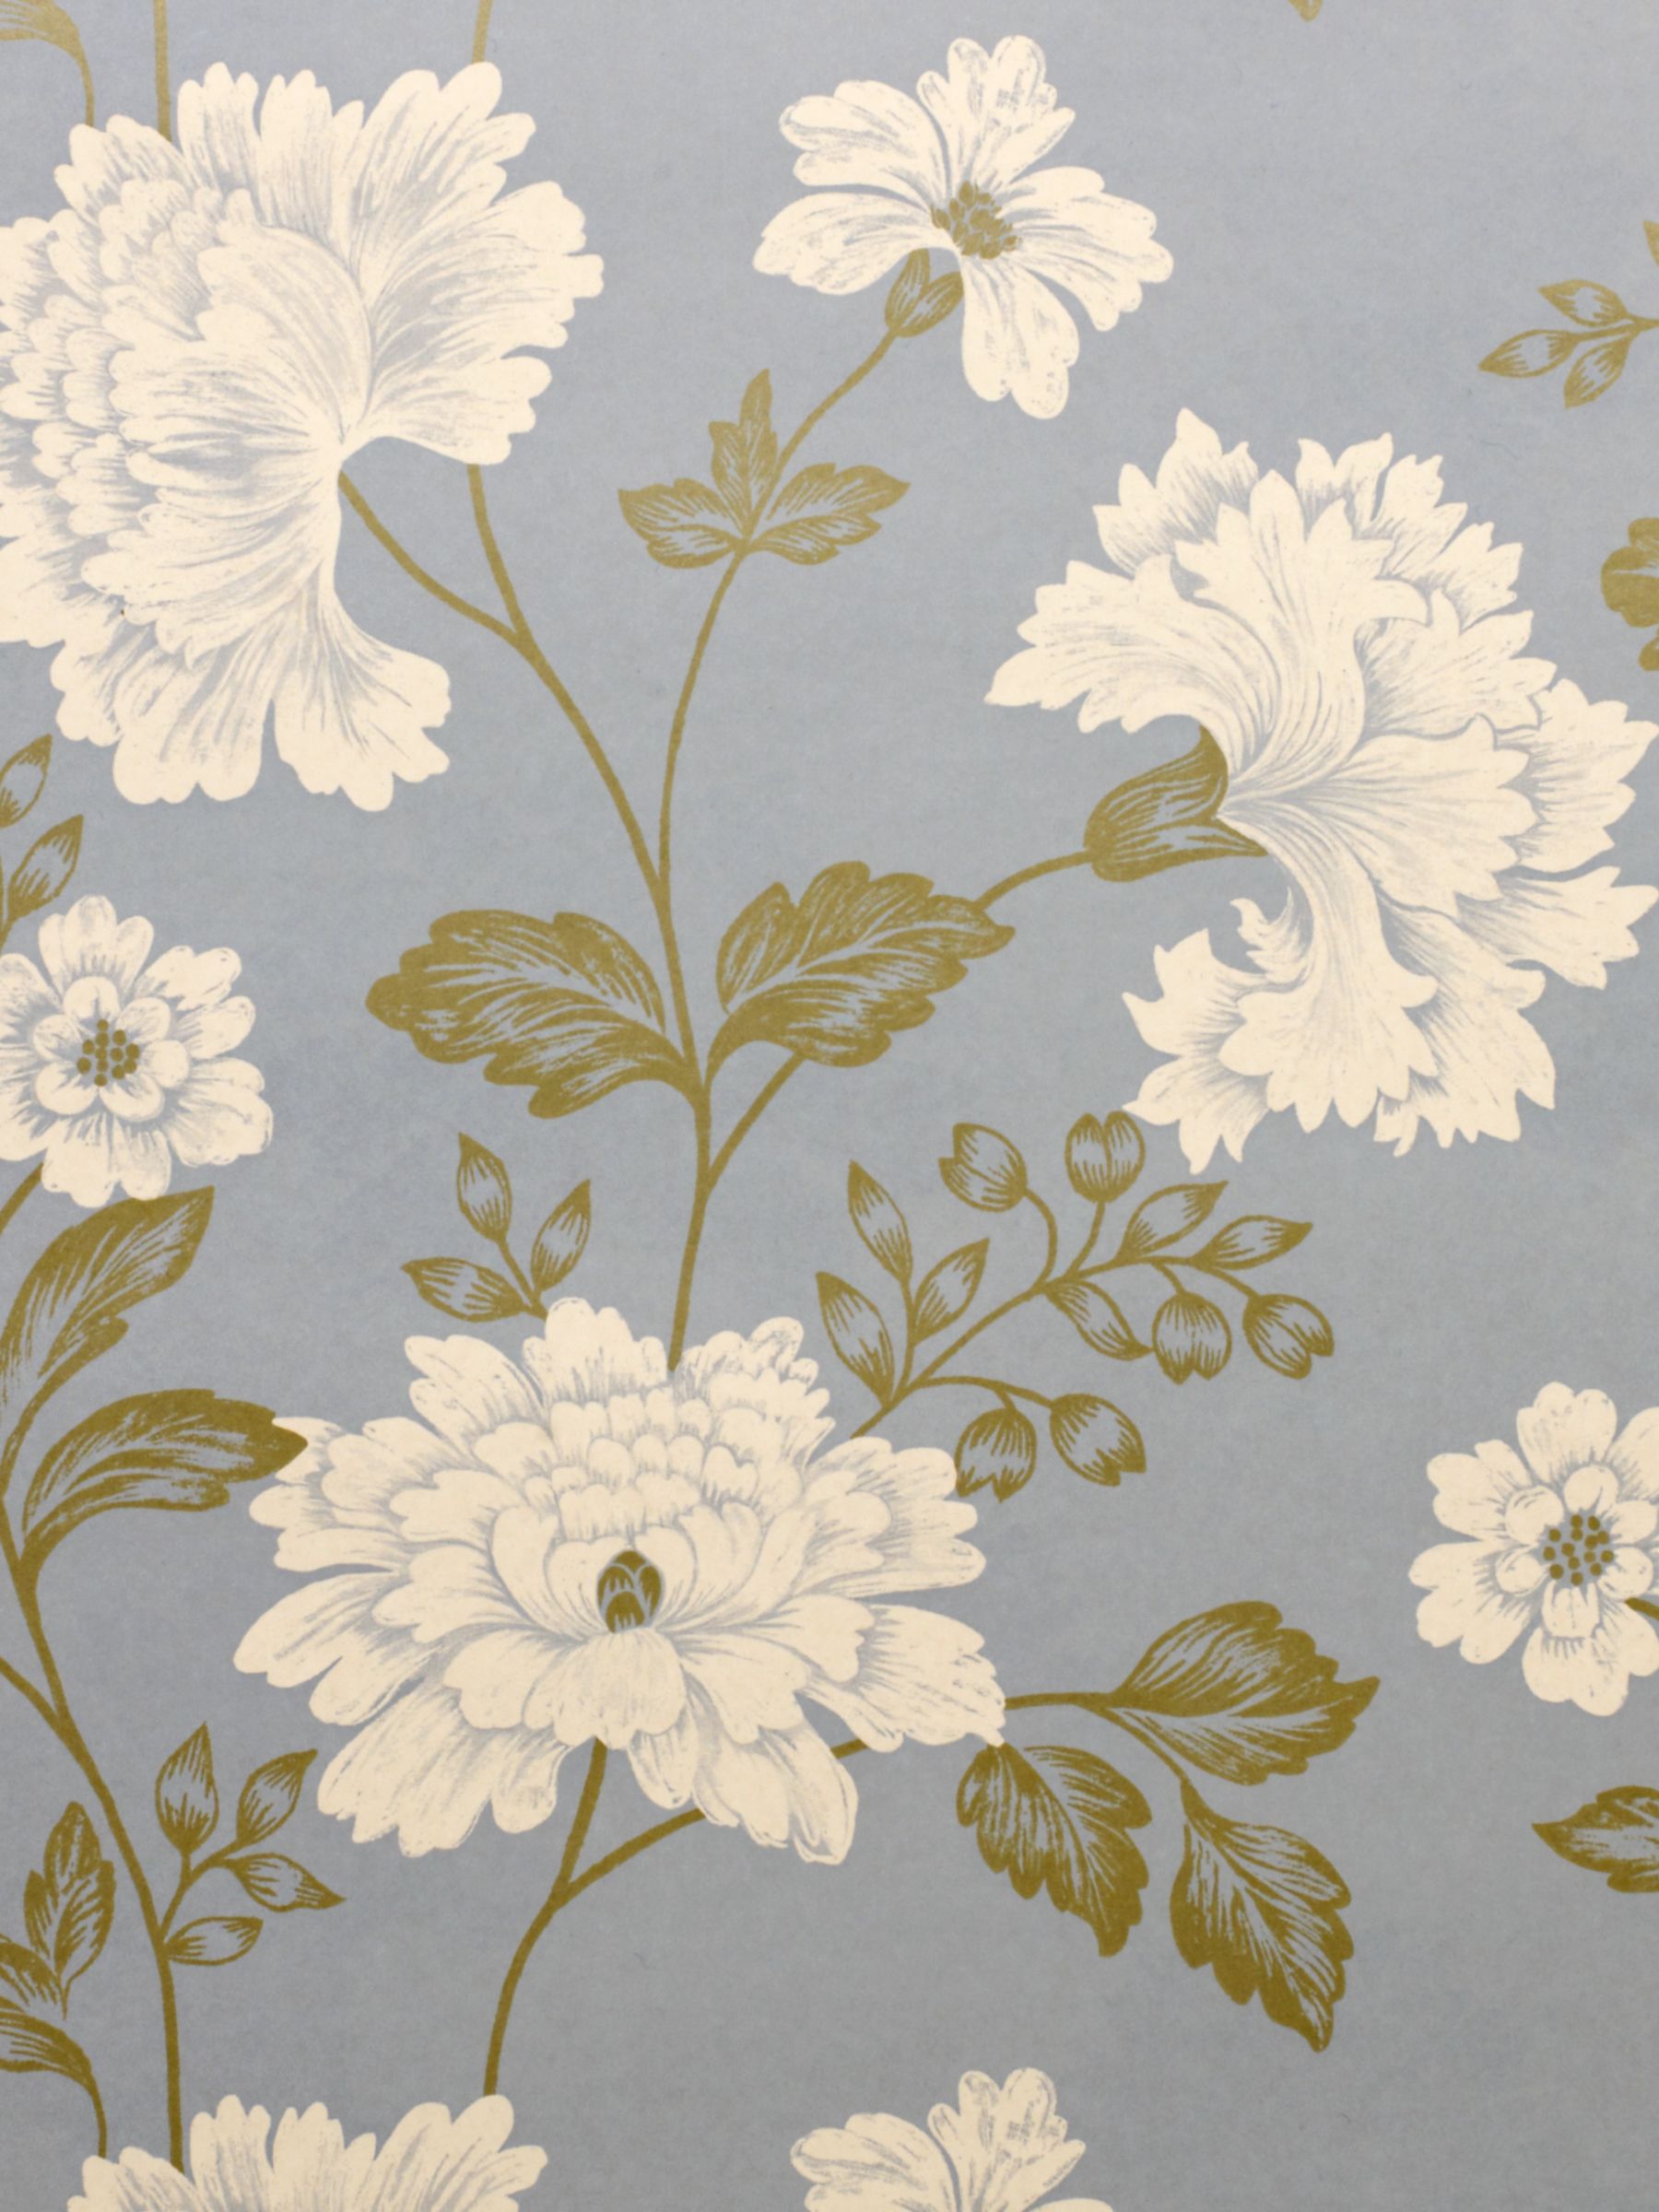 Fantastis 16+ Flower Wallpaper John Lewis - Gambar Bunga Indah